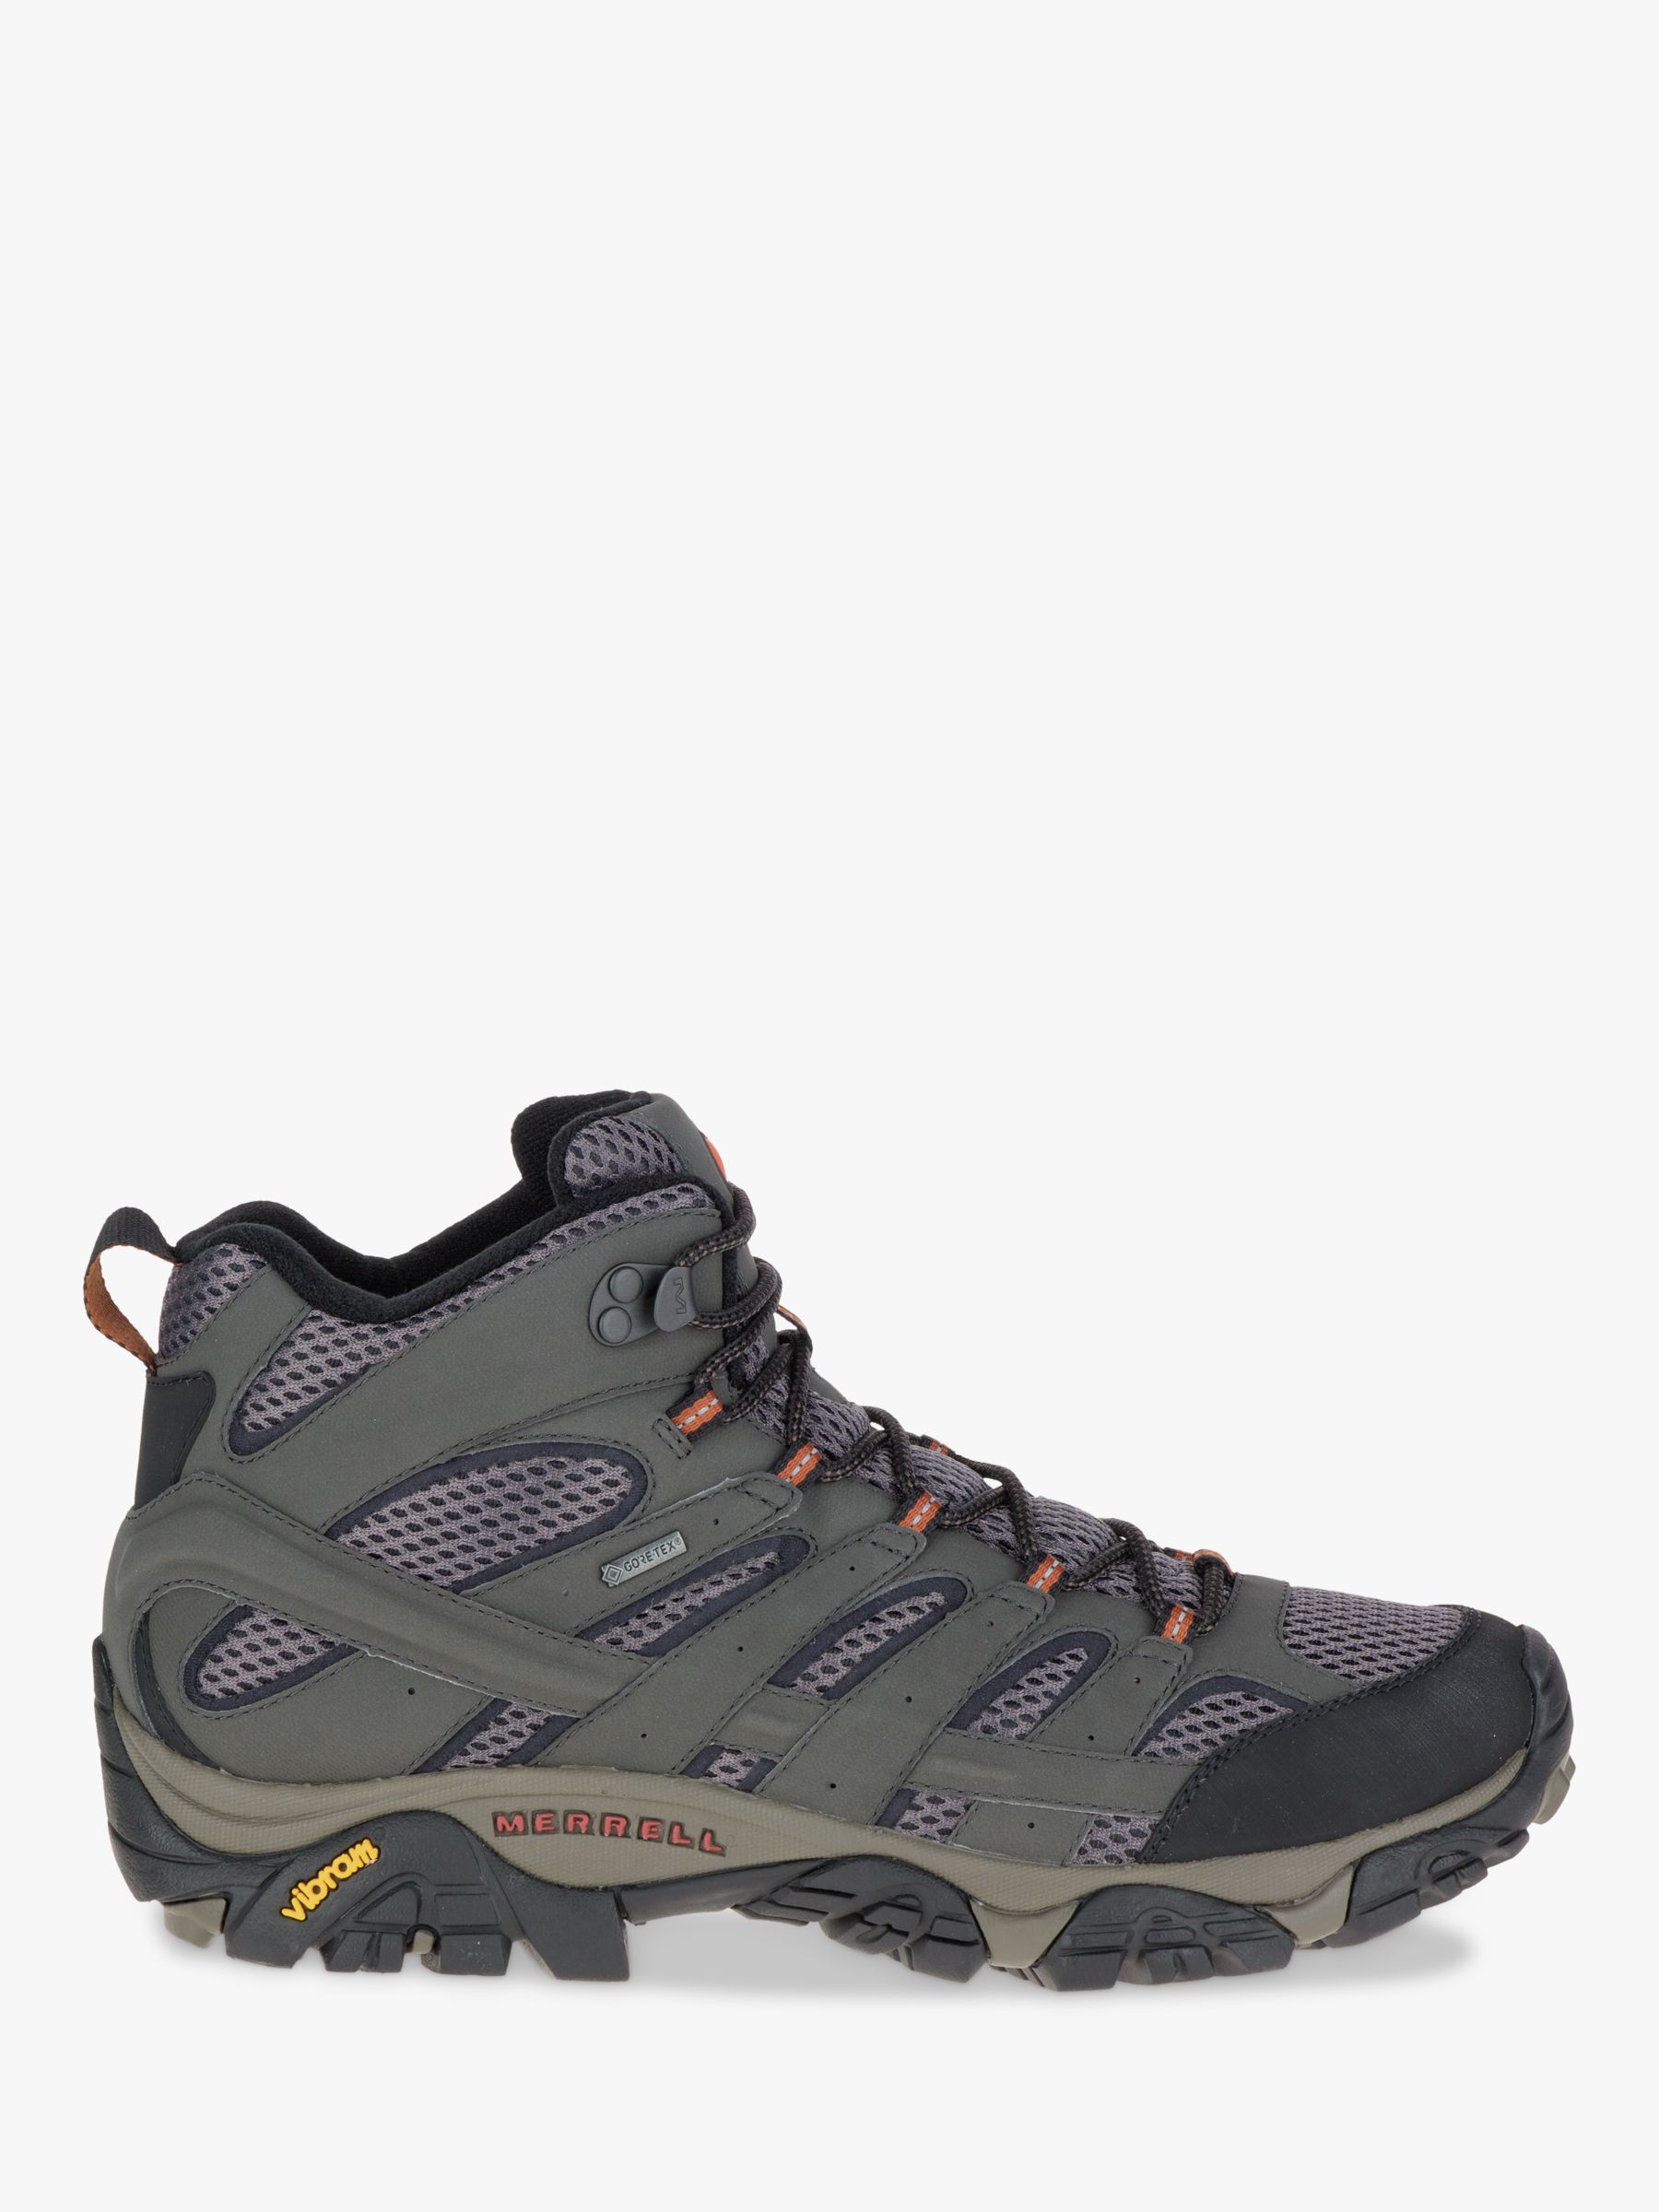 merrell vibram hiking shoes waterproof